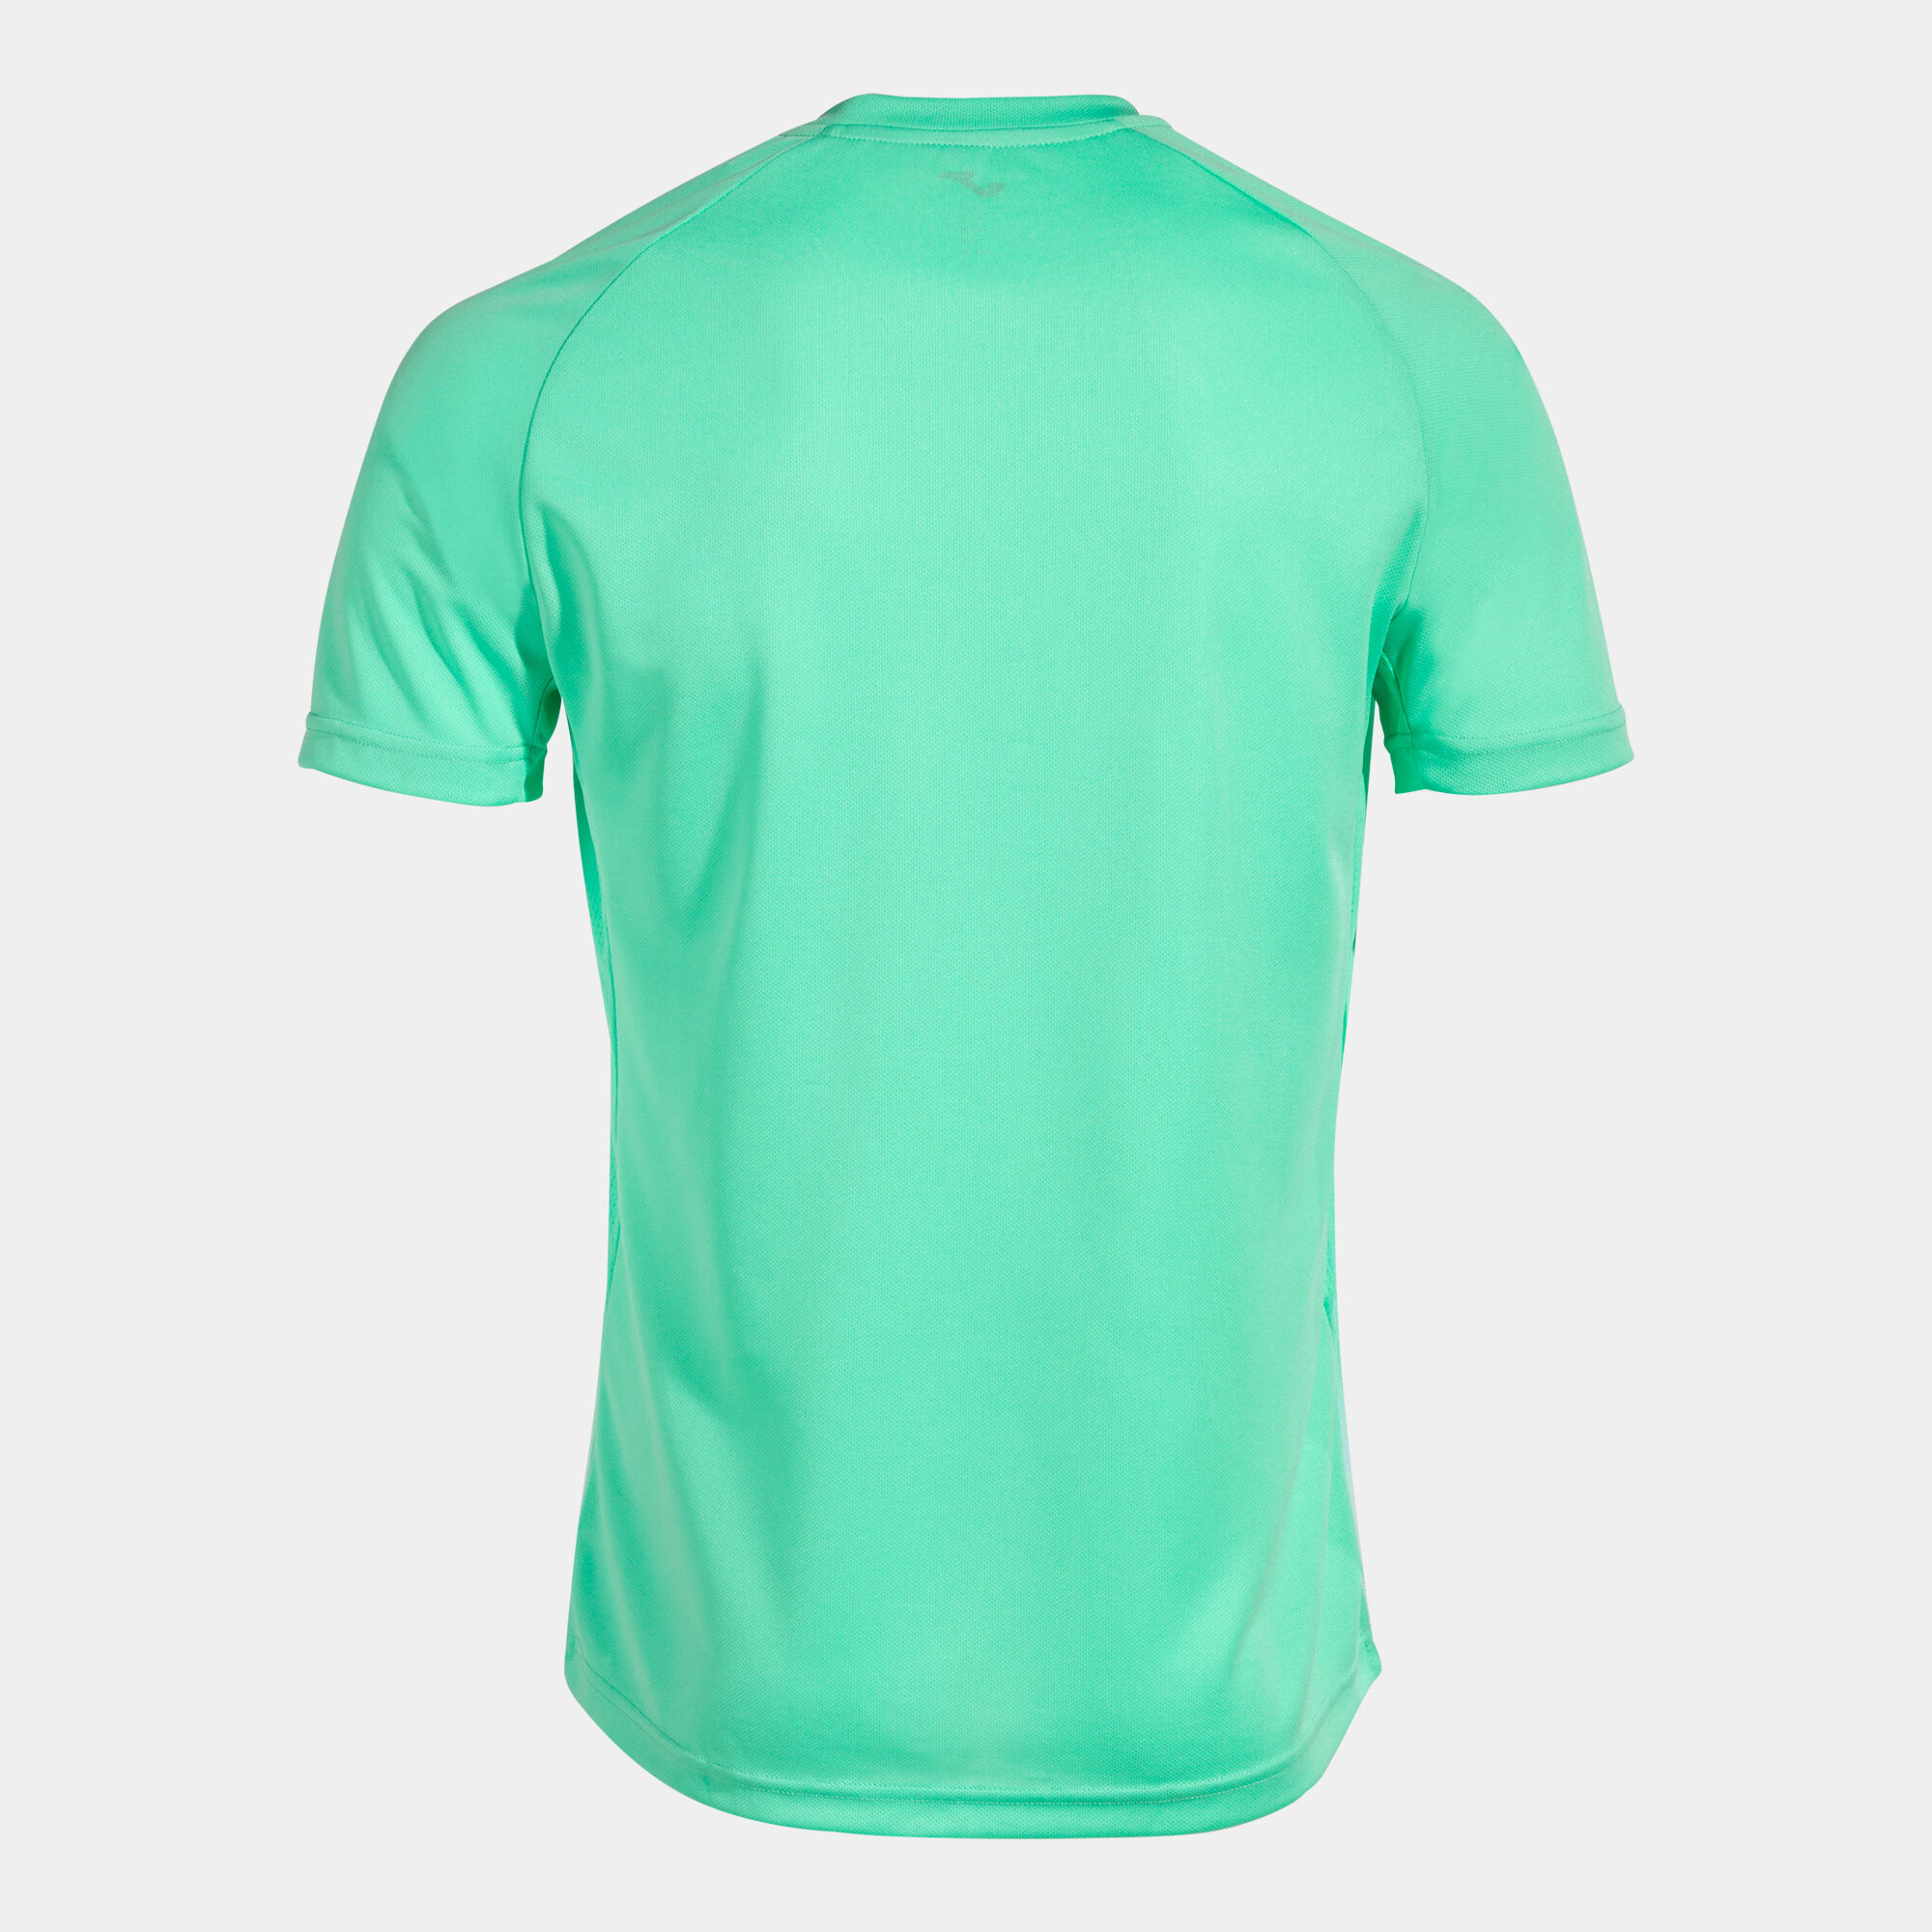 Camiseta Joma TIGER V 103235.601 - Deportes Manzanedo